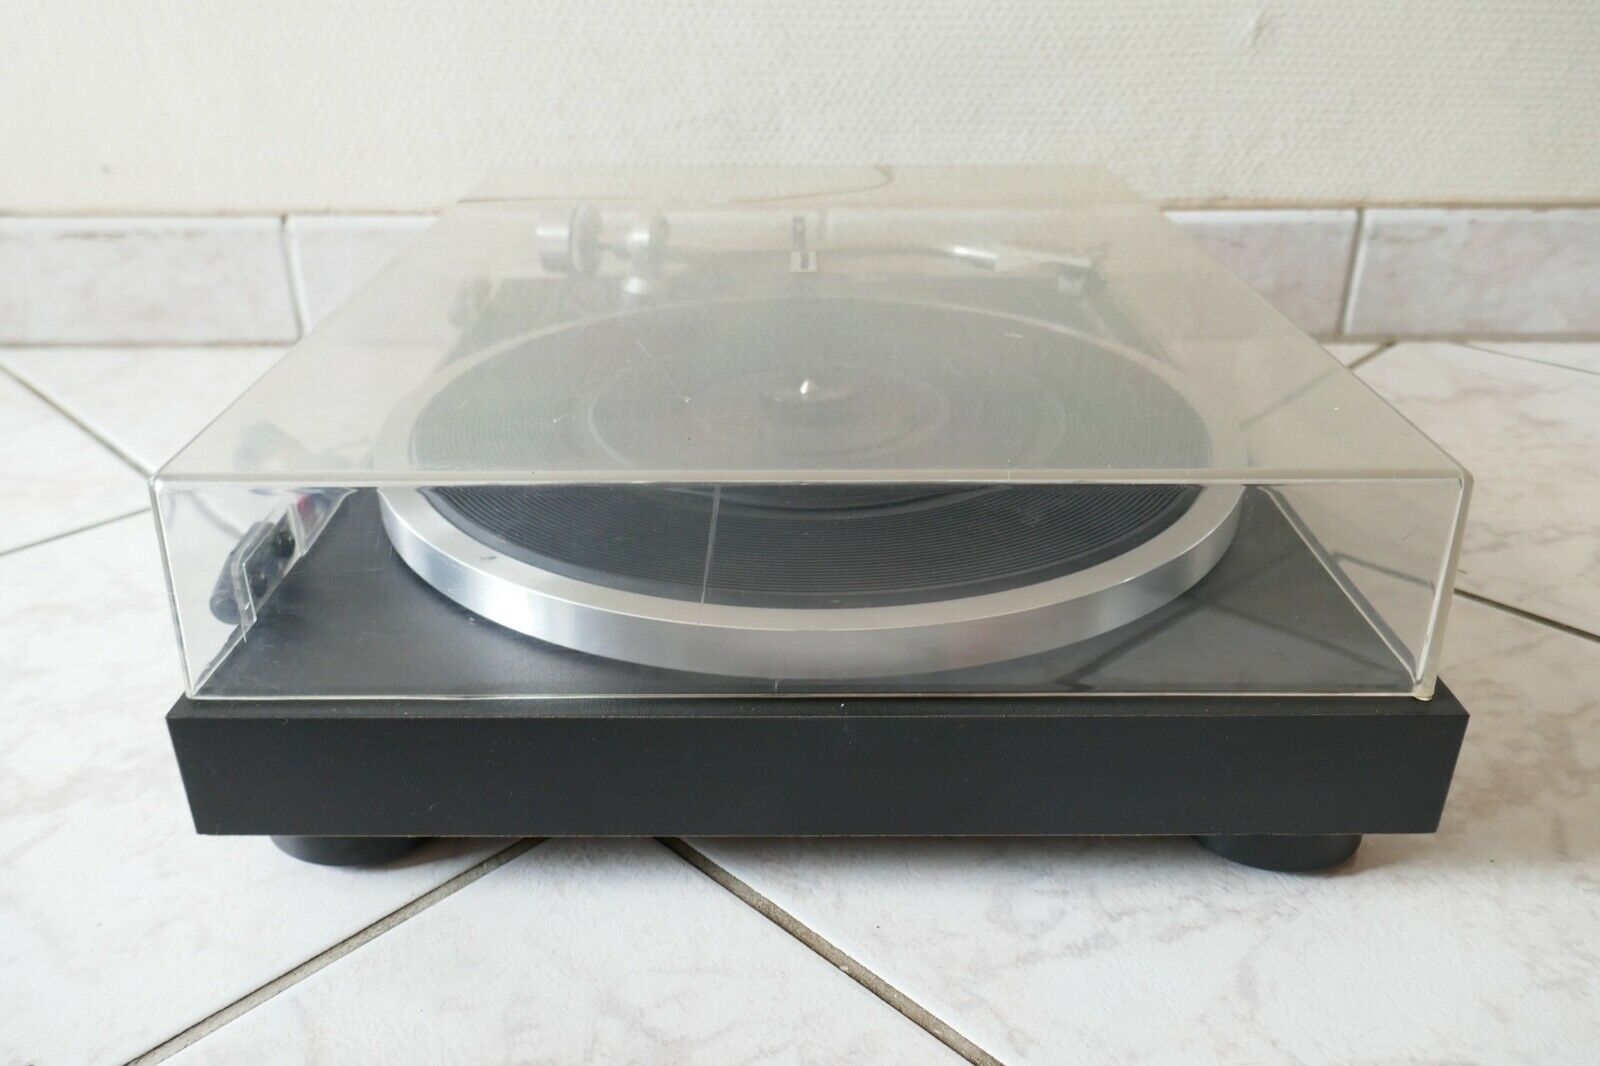 platine vinyle turntable pioneer pl-514X vintage occasion